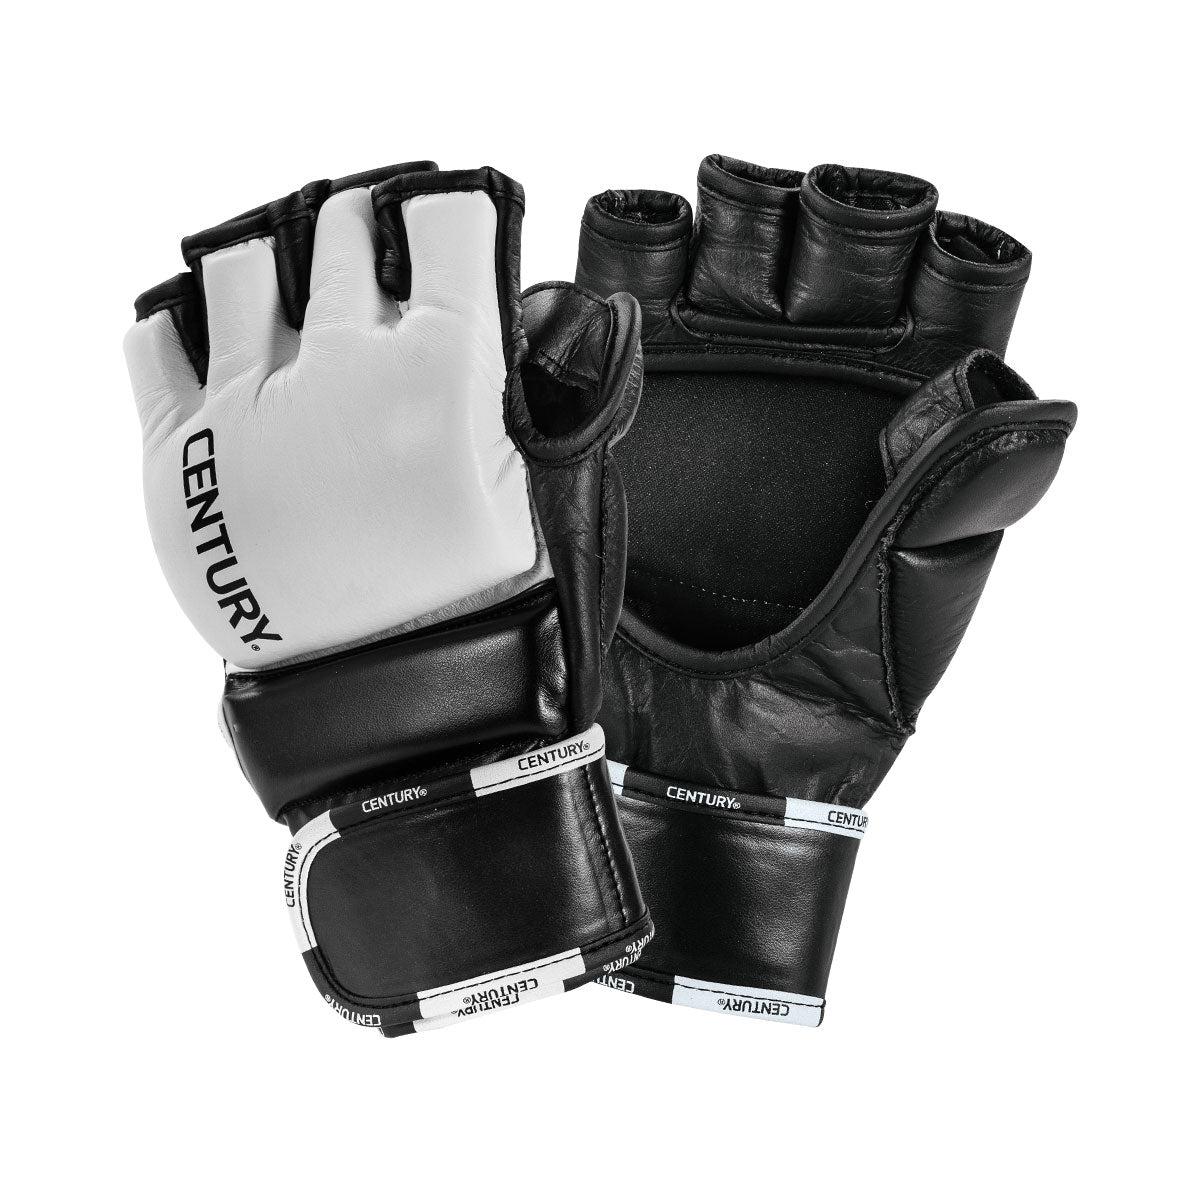 Creed Training Glove Black/White